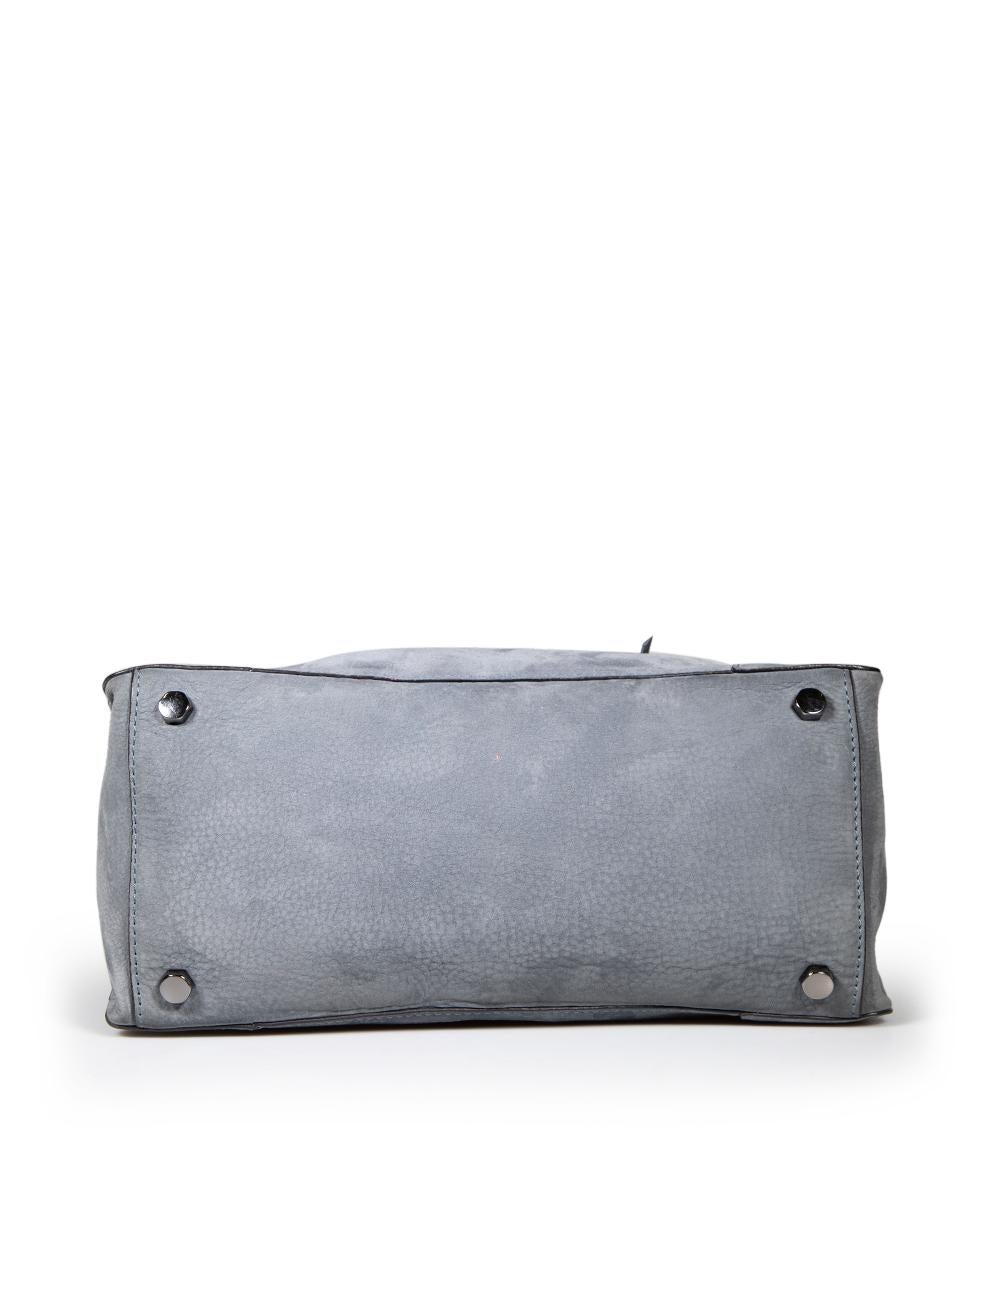 Women's Rebecca Minkoff Grey Suede Medium Handbag For Sale